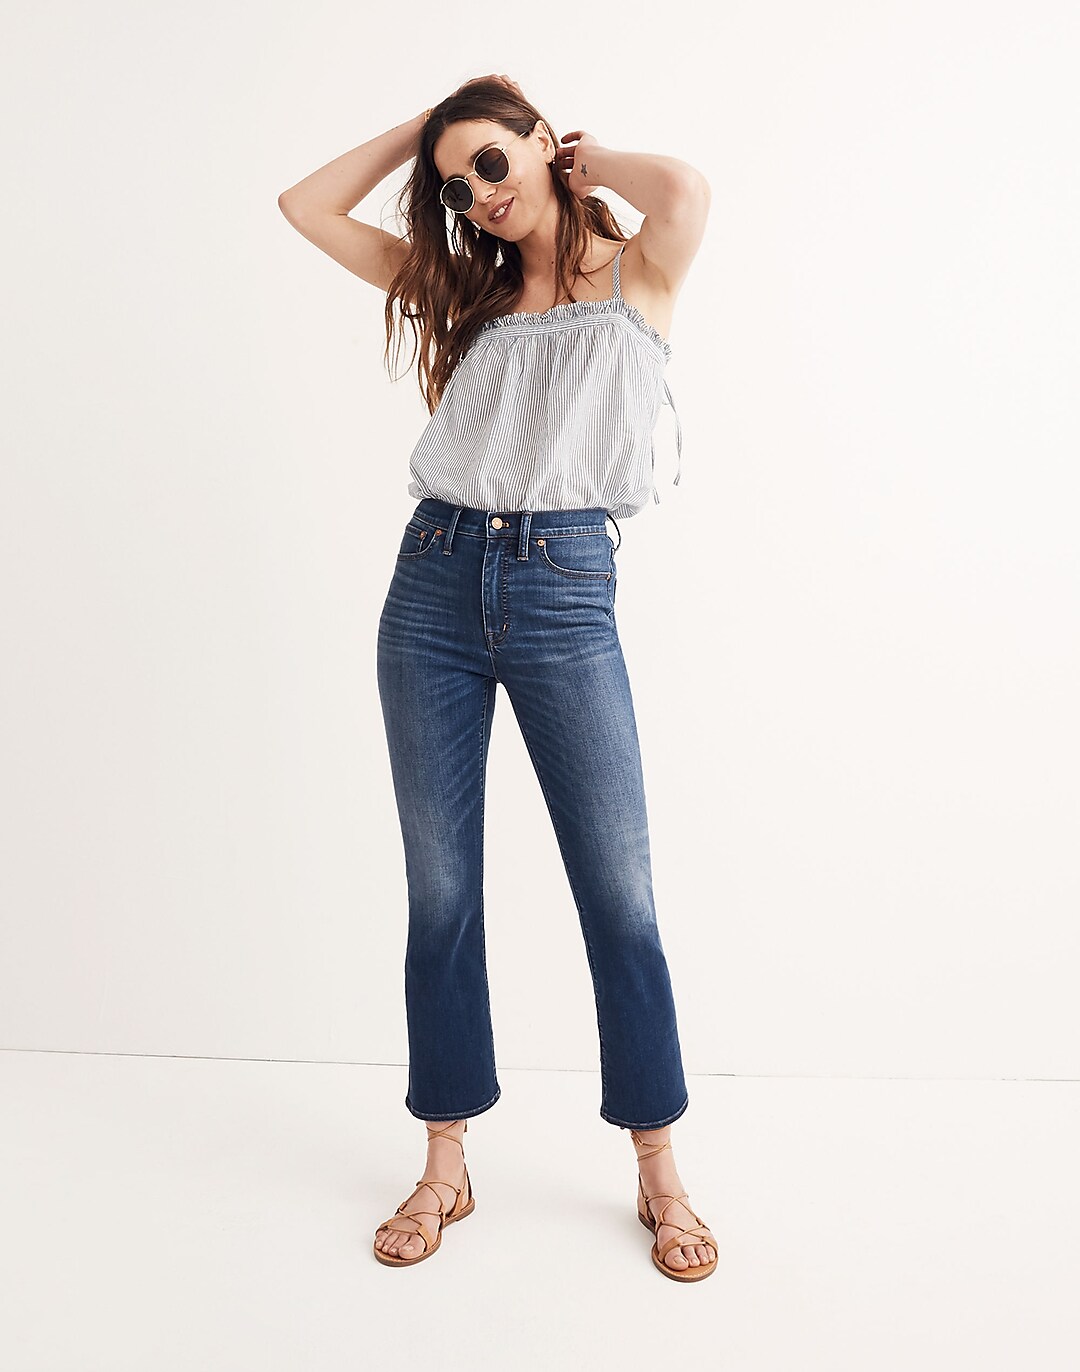 Calça Jeans com Damier Distorcido - Ready-to-Wear